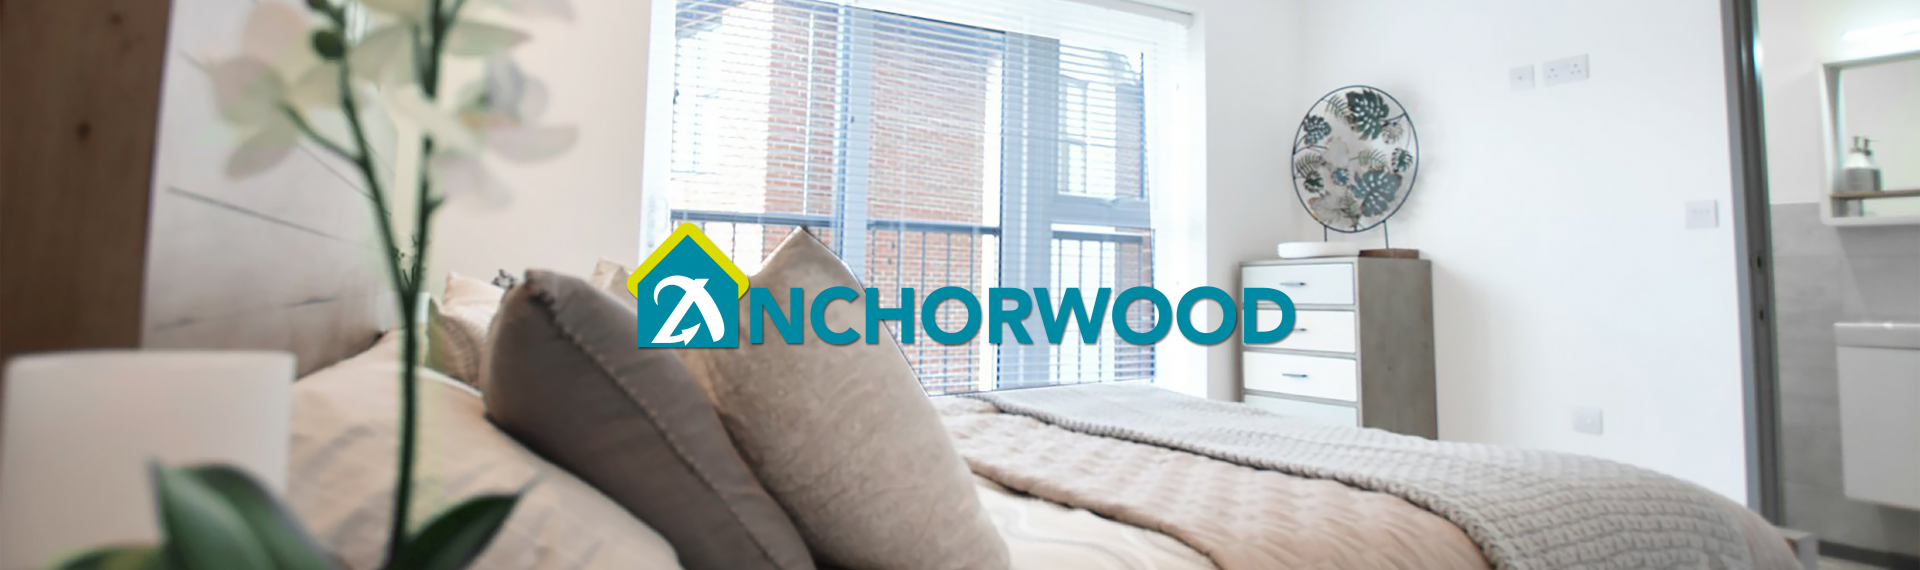 Anchorwood Ltd